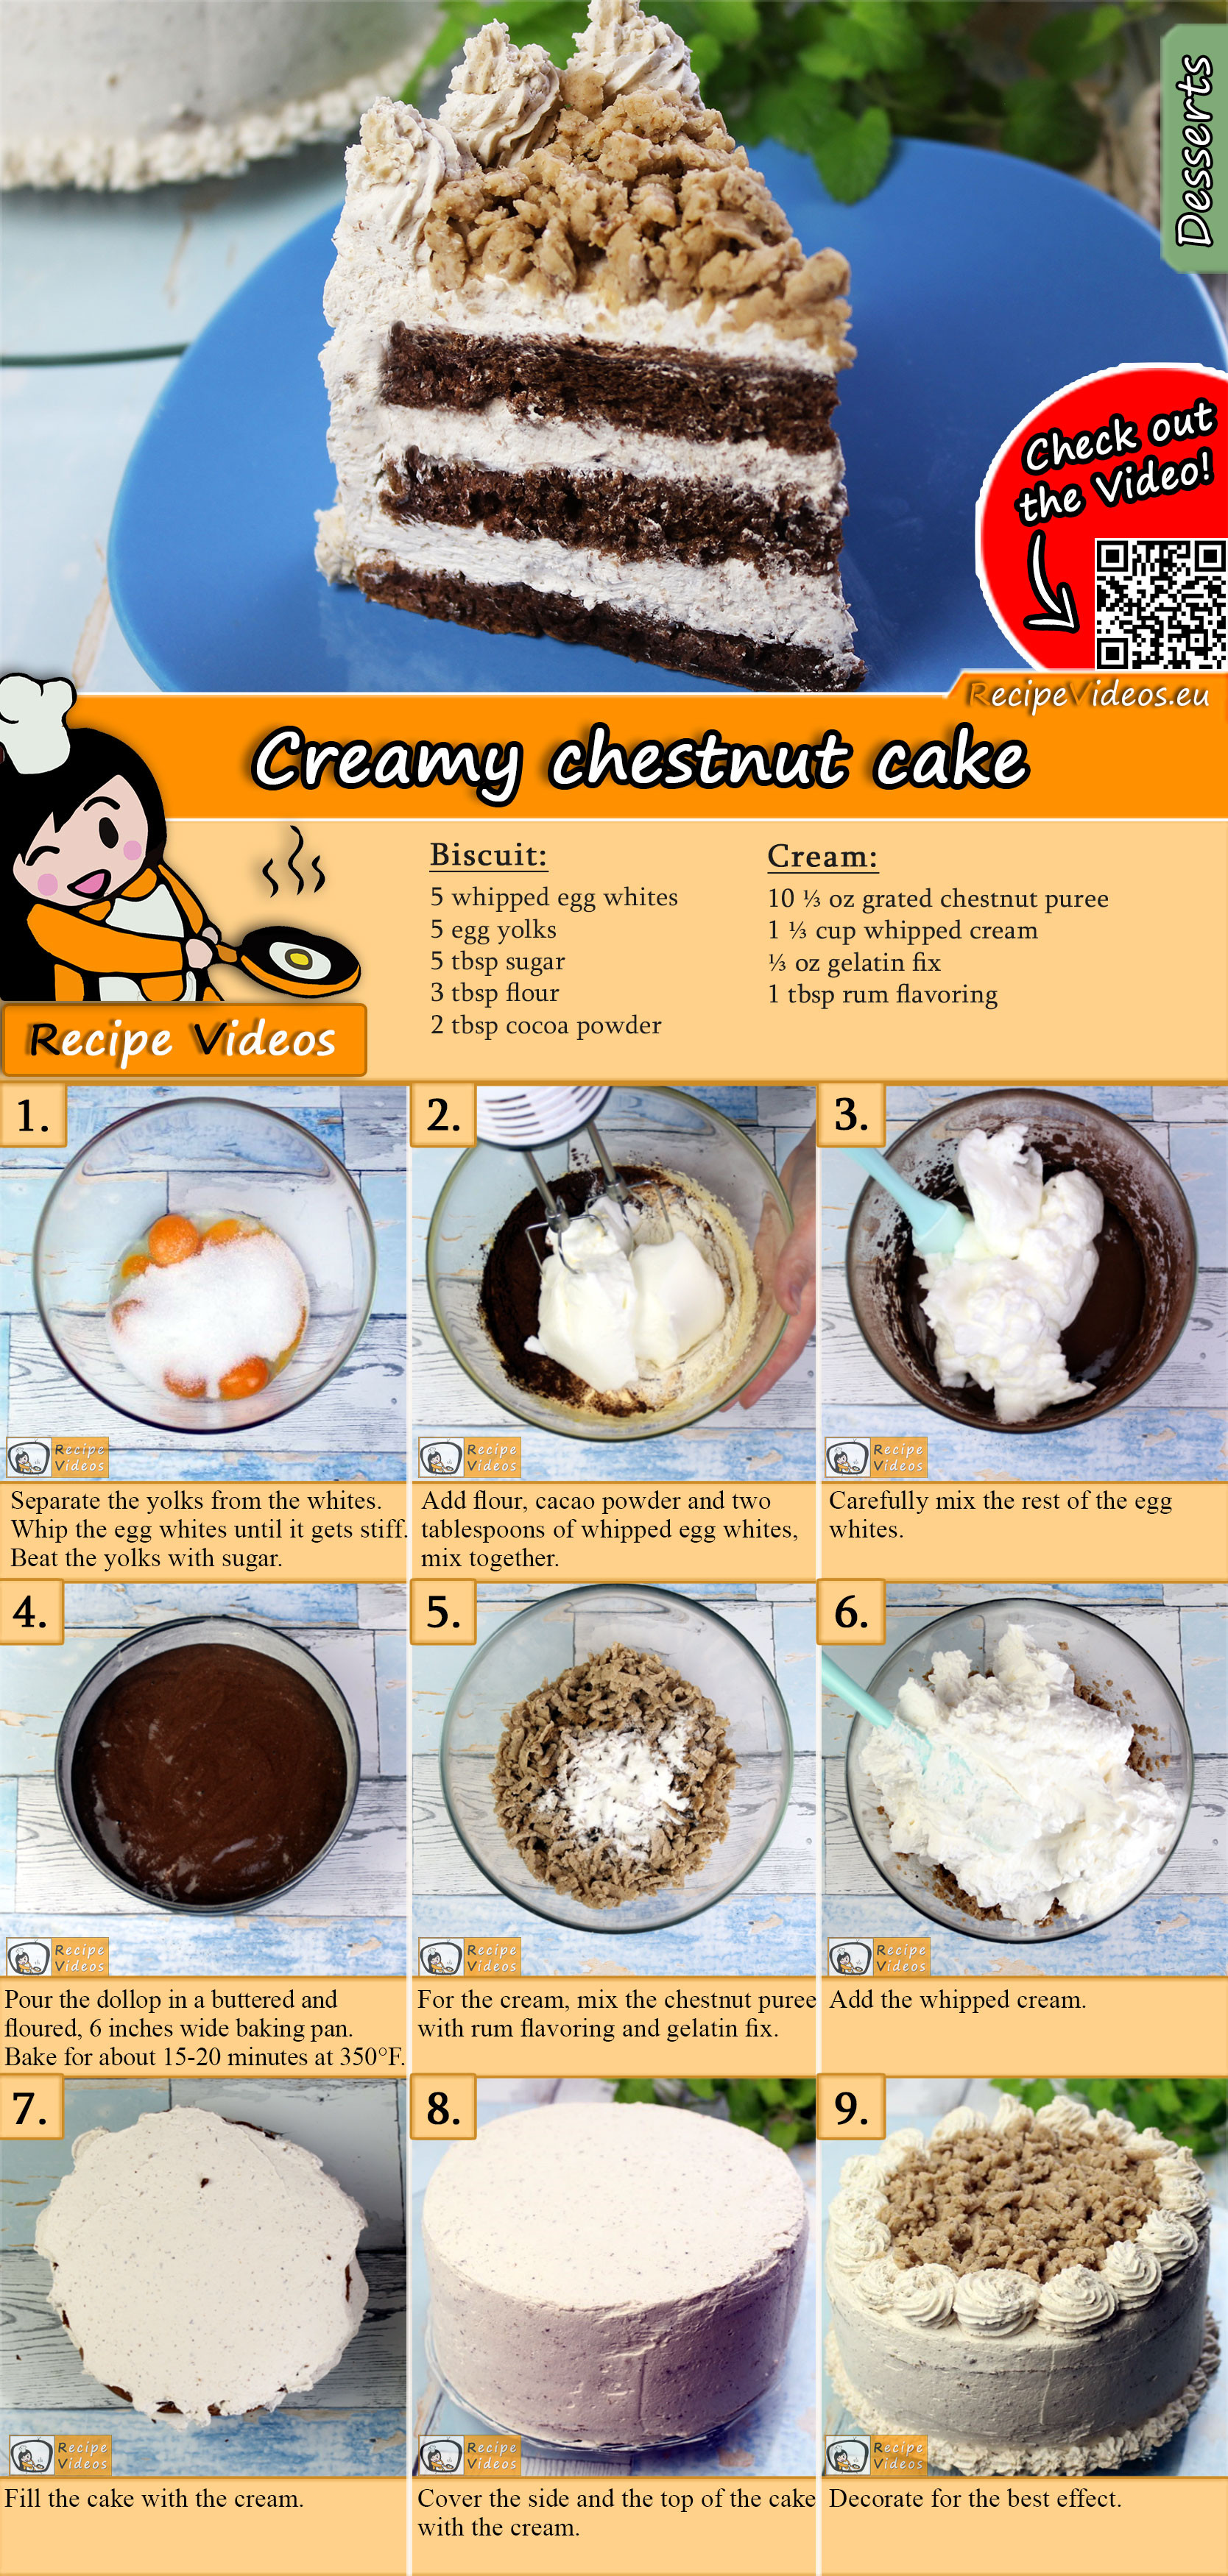 Creamy chestnut cake recipe with video